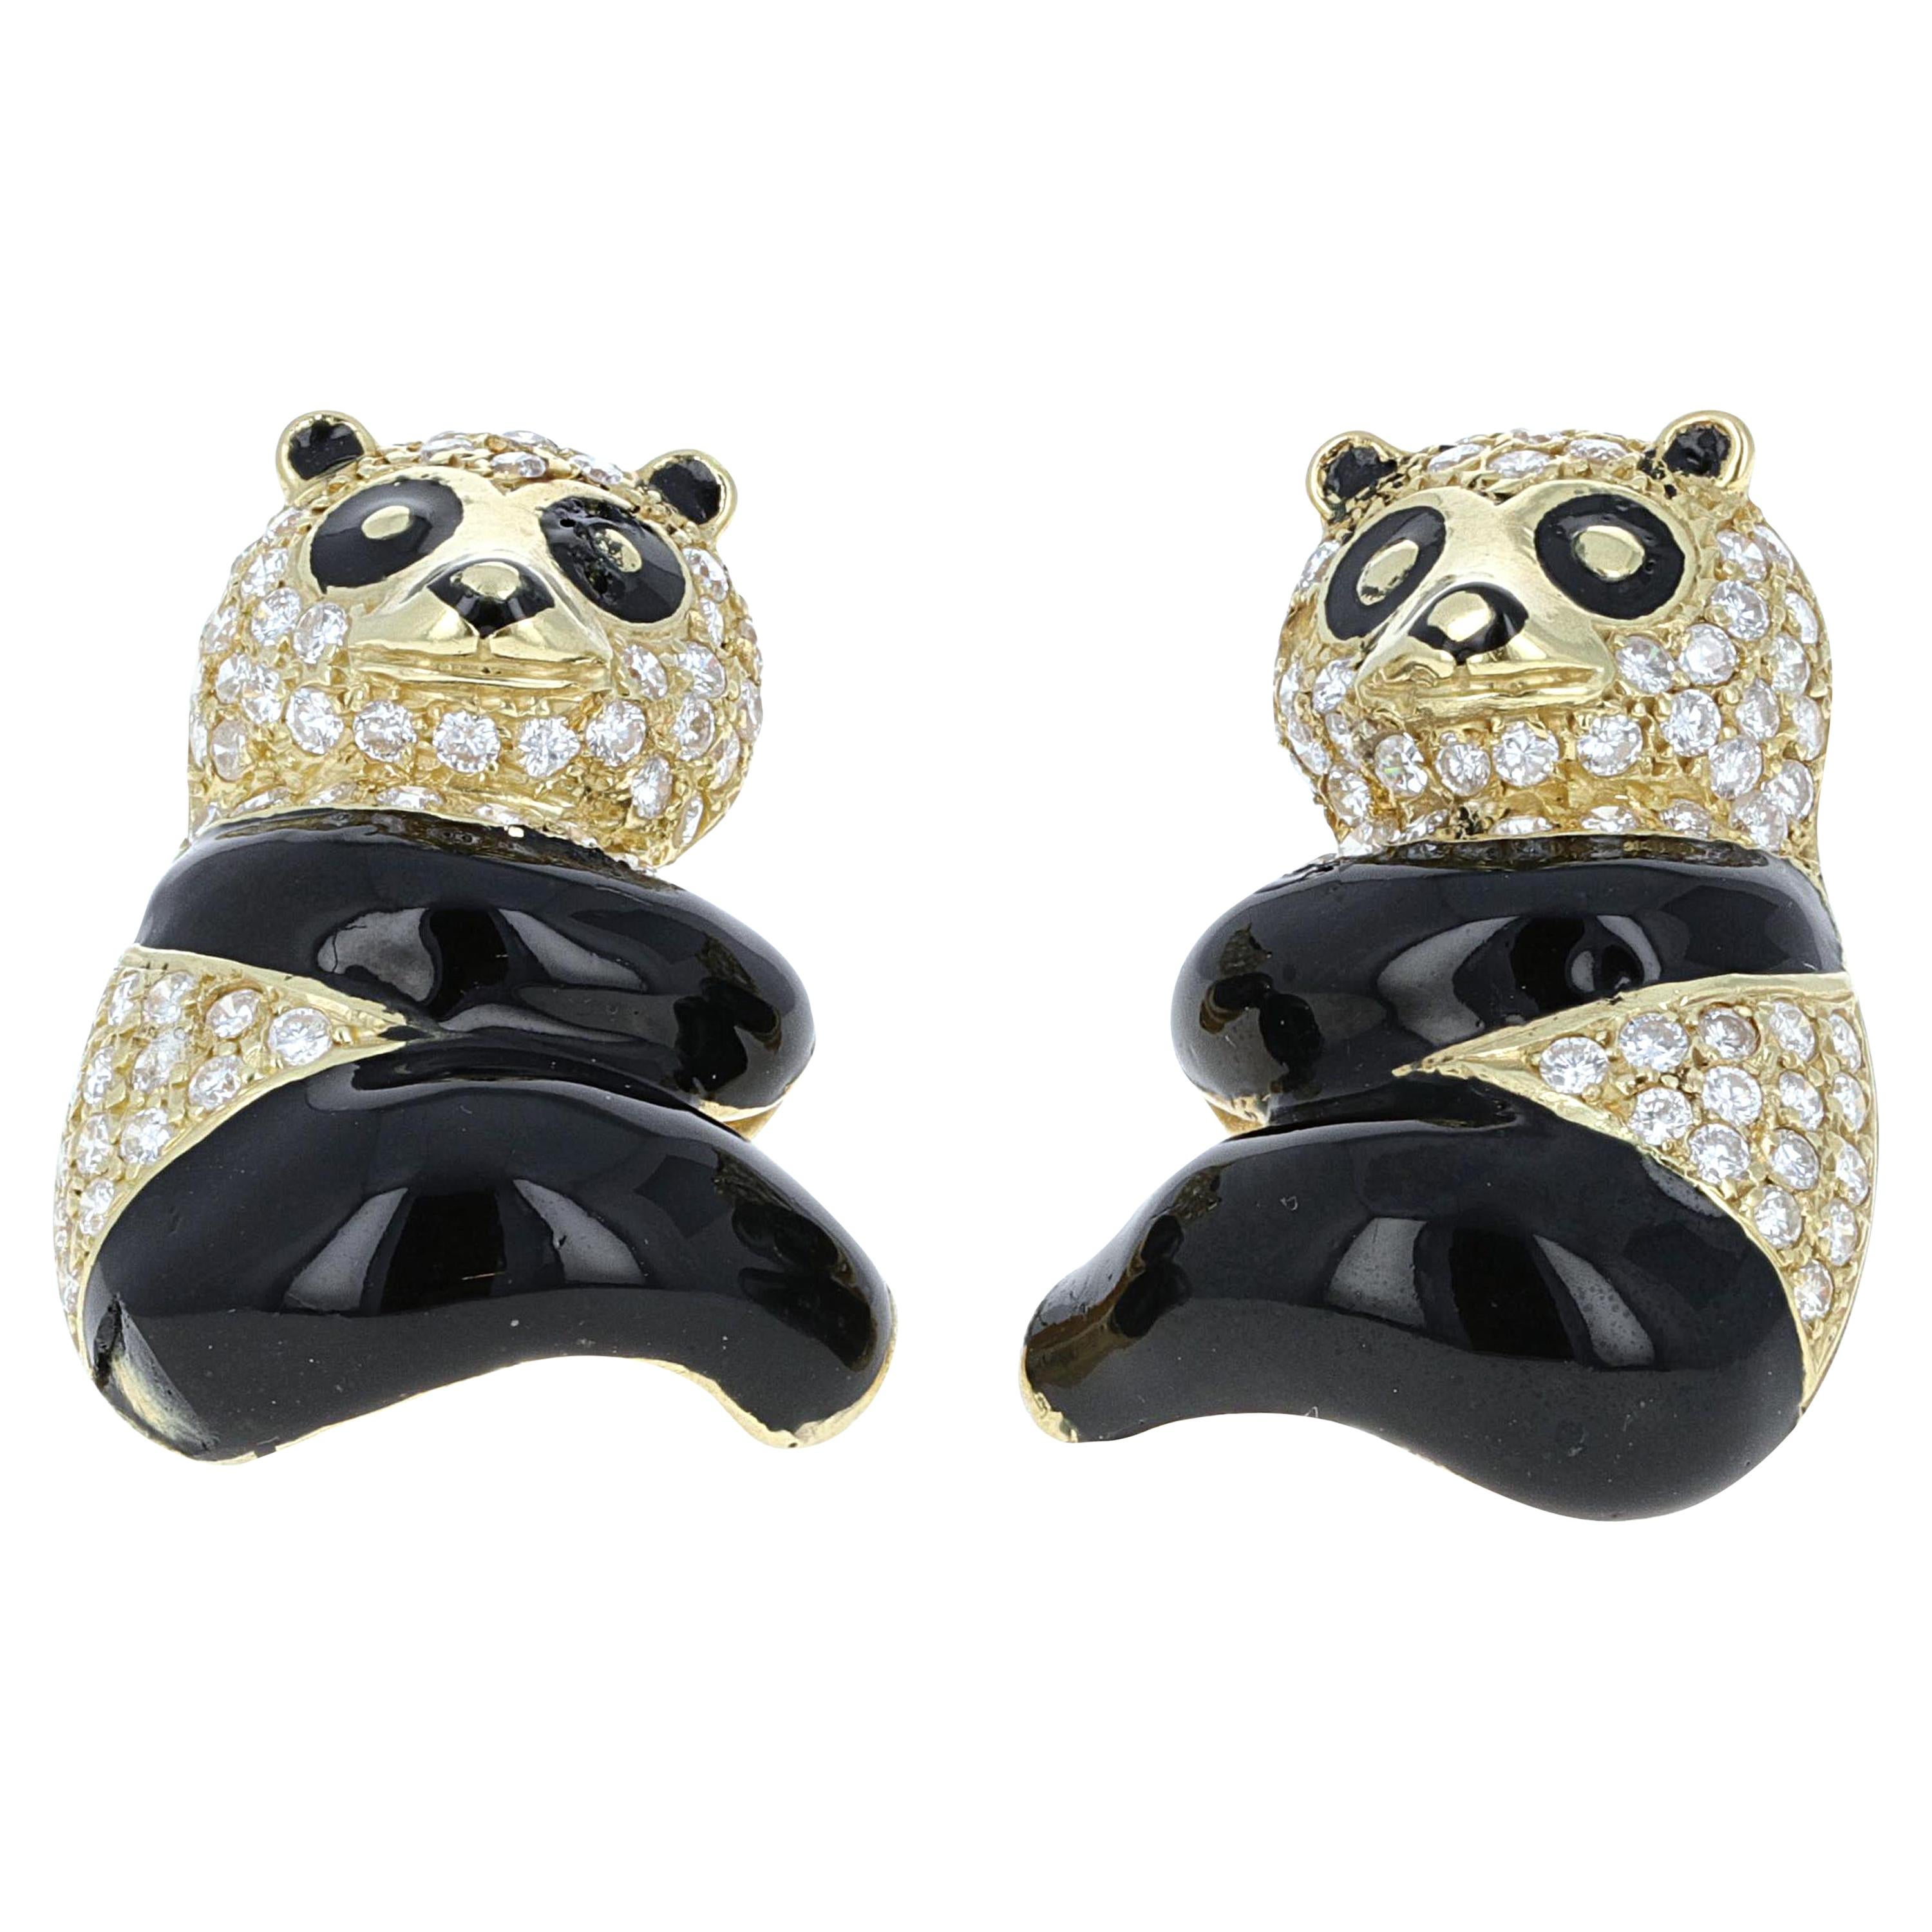 Buy Silver Panda Earrings Gold Panda Studs Cute Fun Quirky Online in India   Etsy